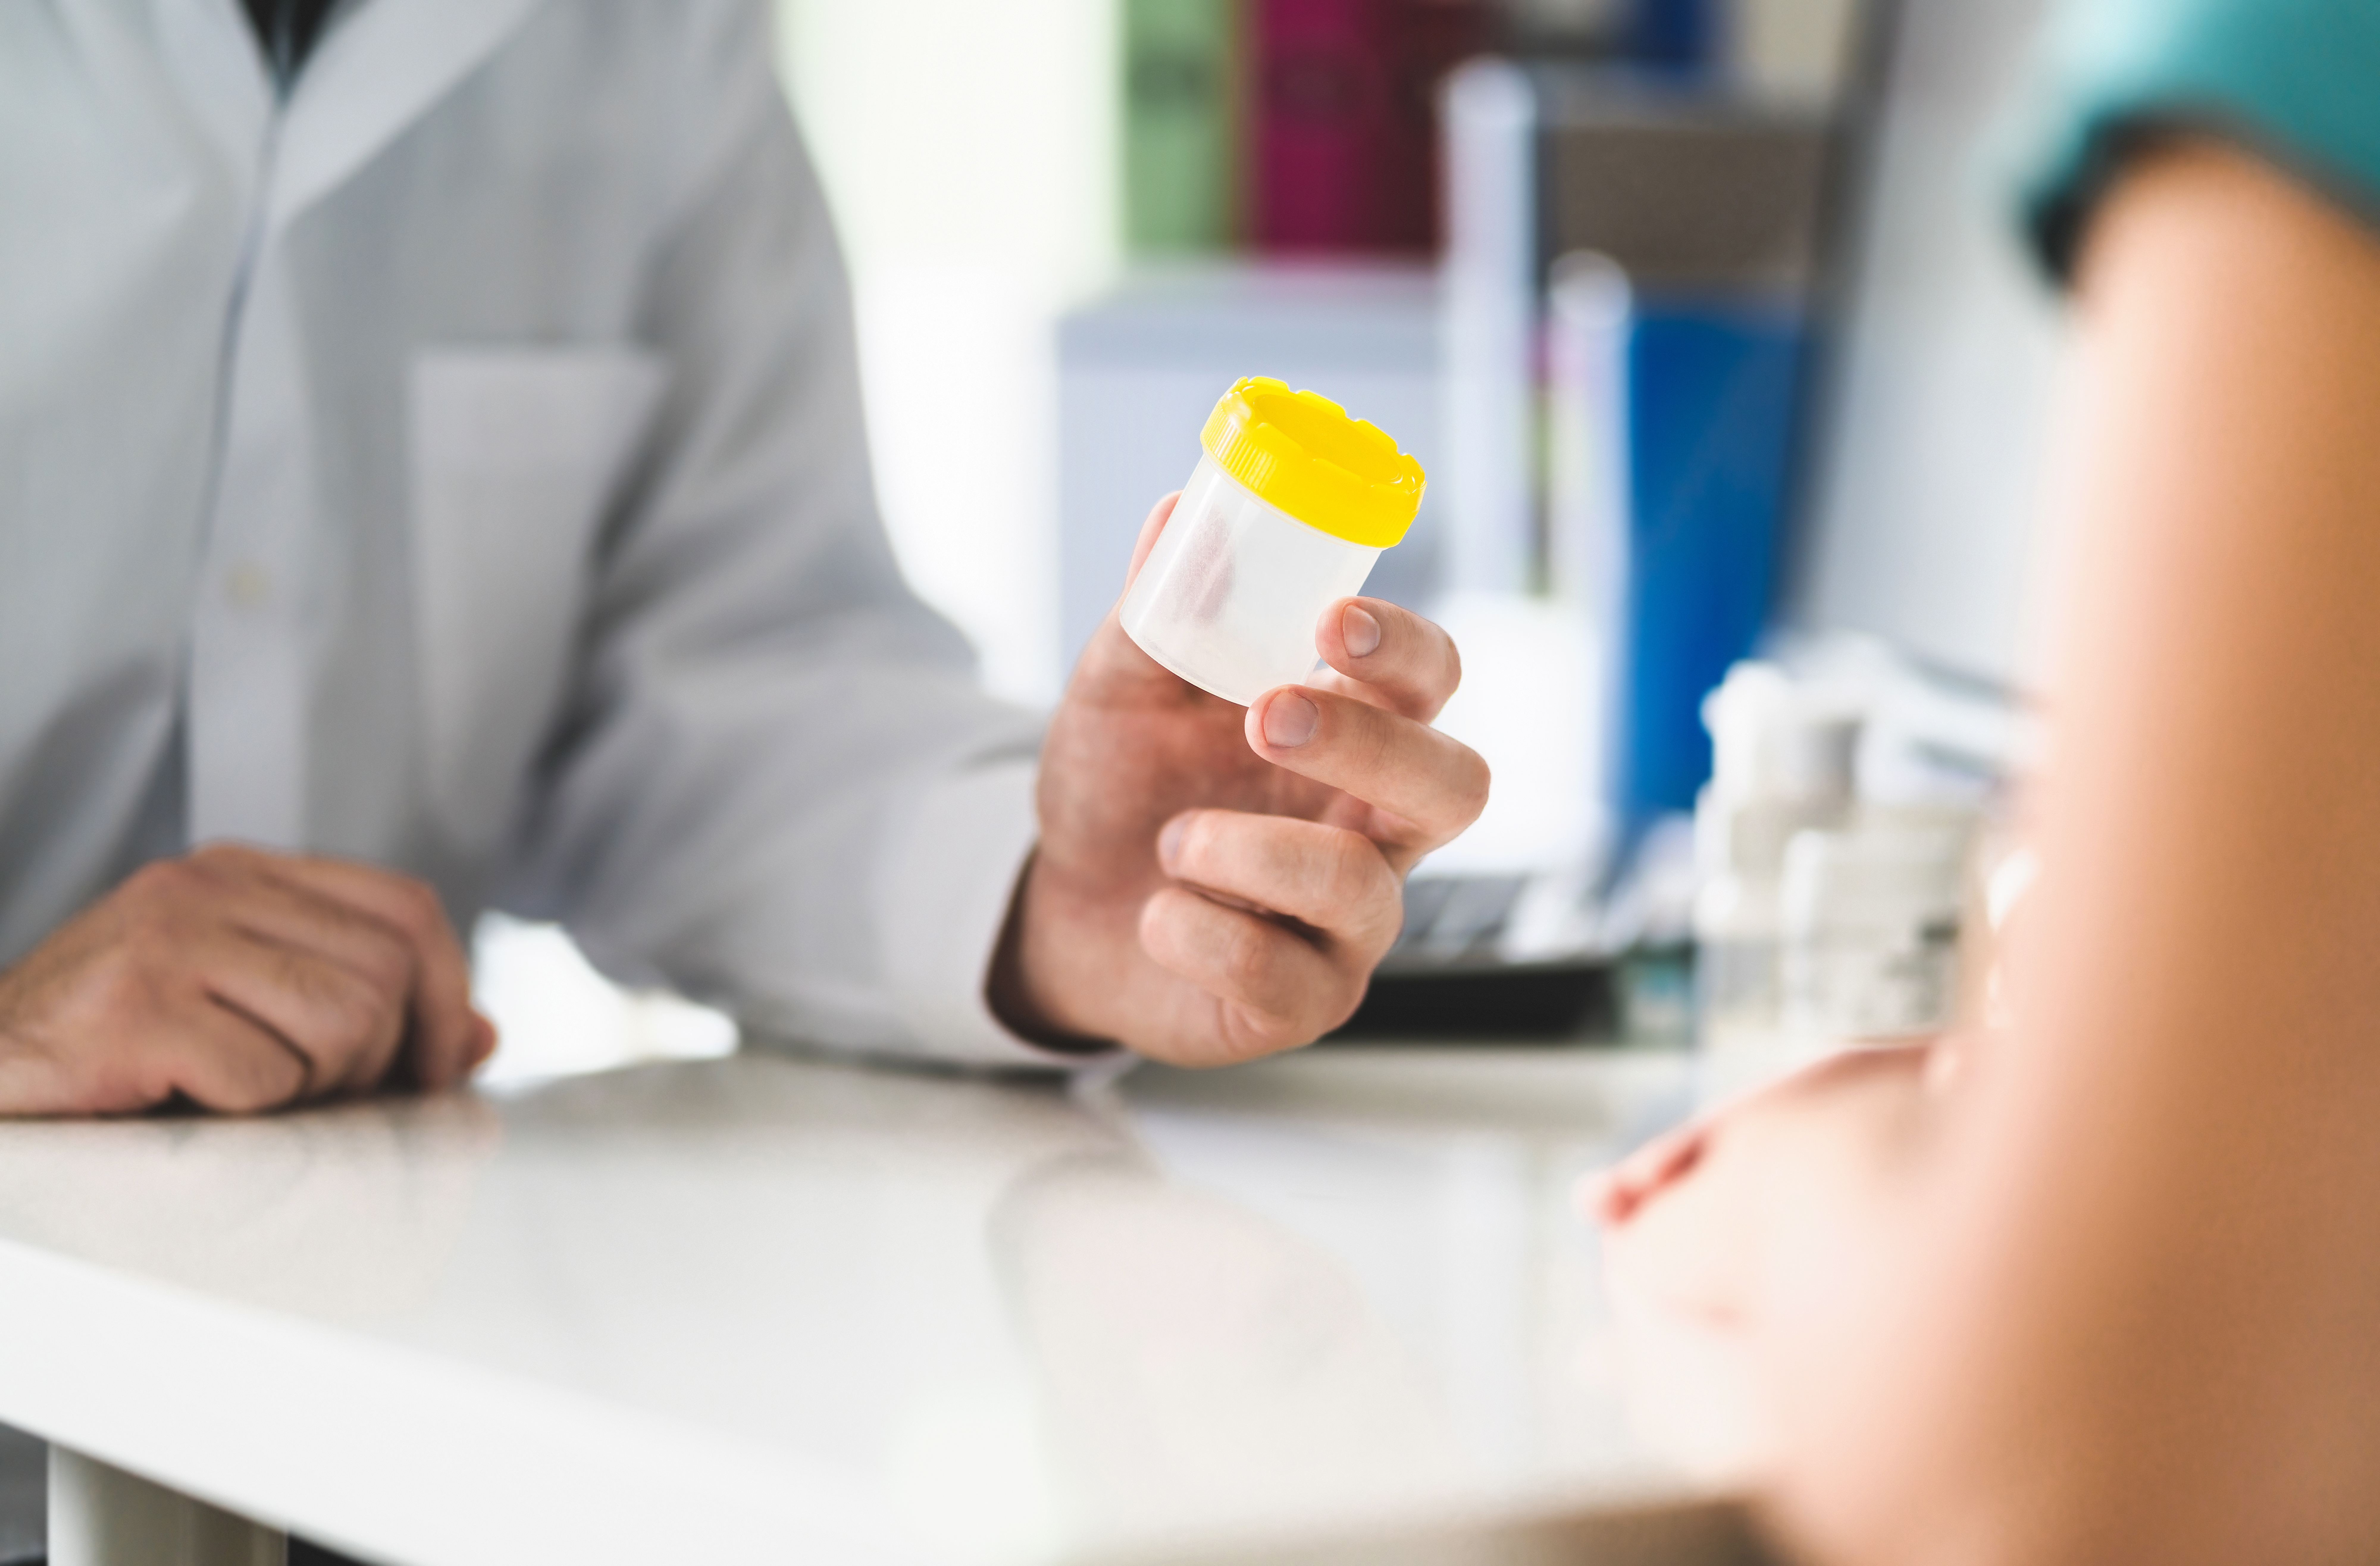 Positive Drug Tests Are Increasing Across U.S.